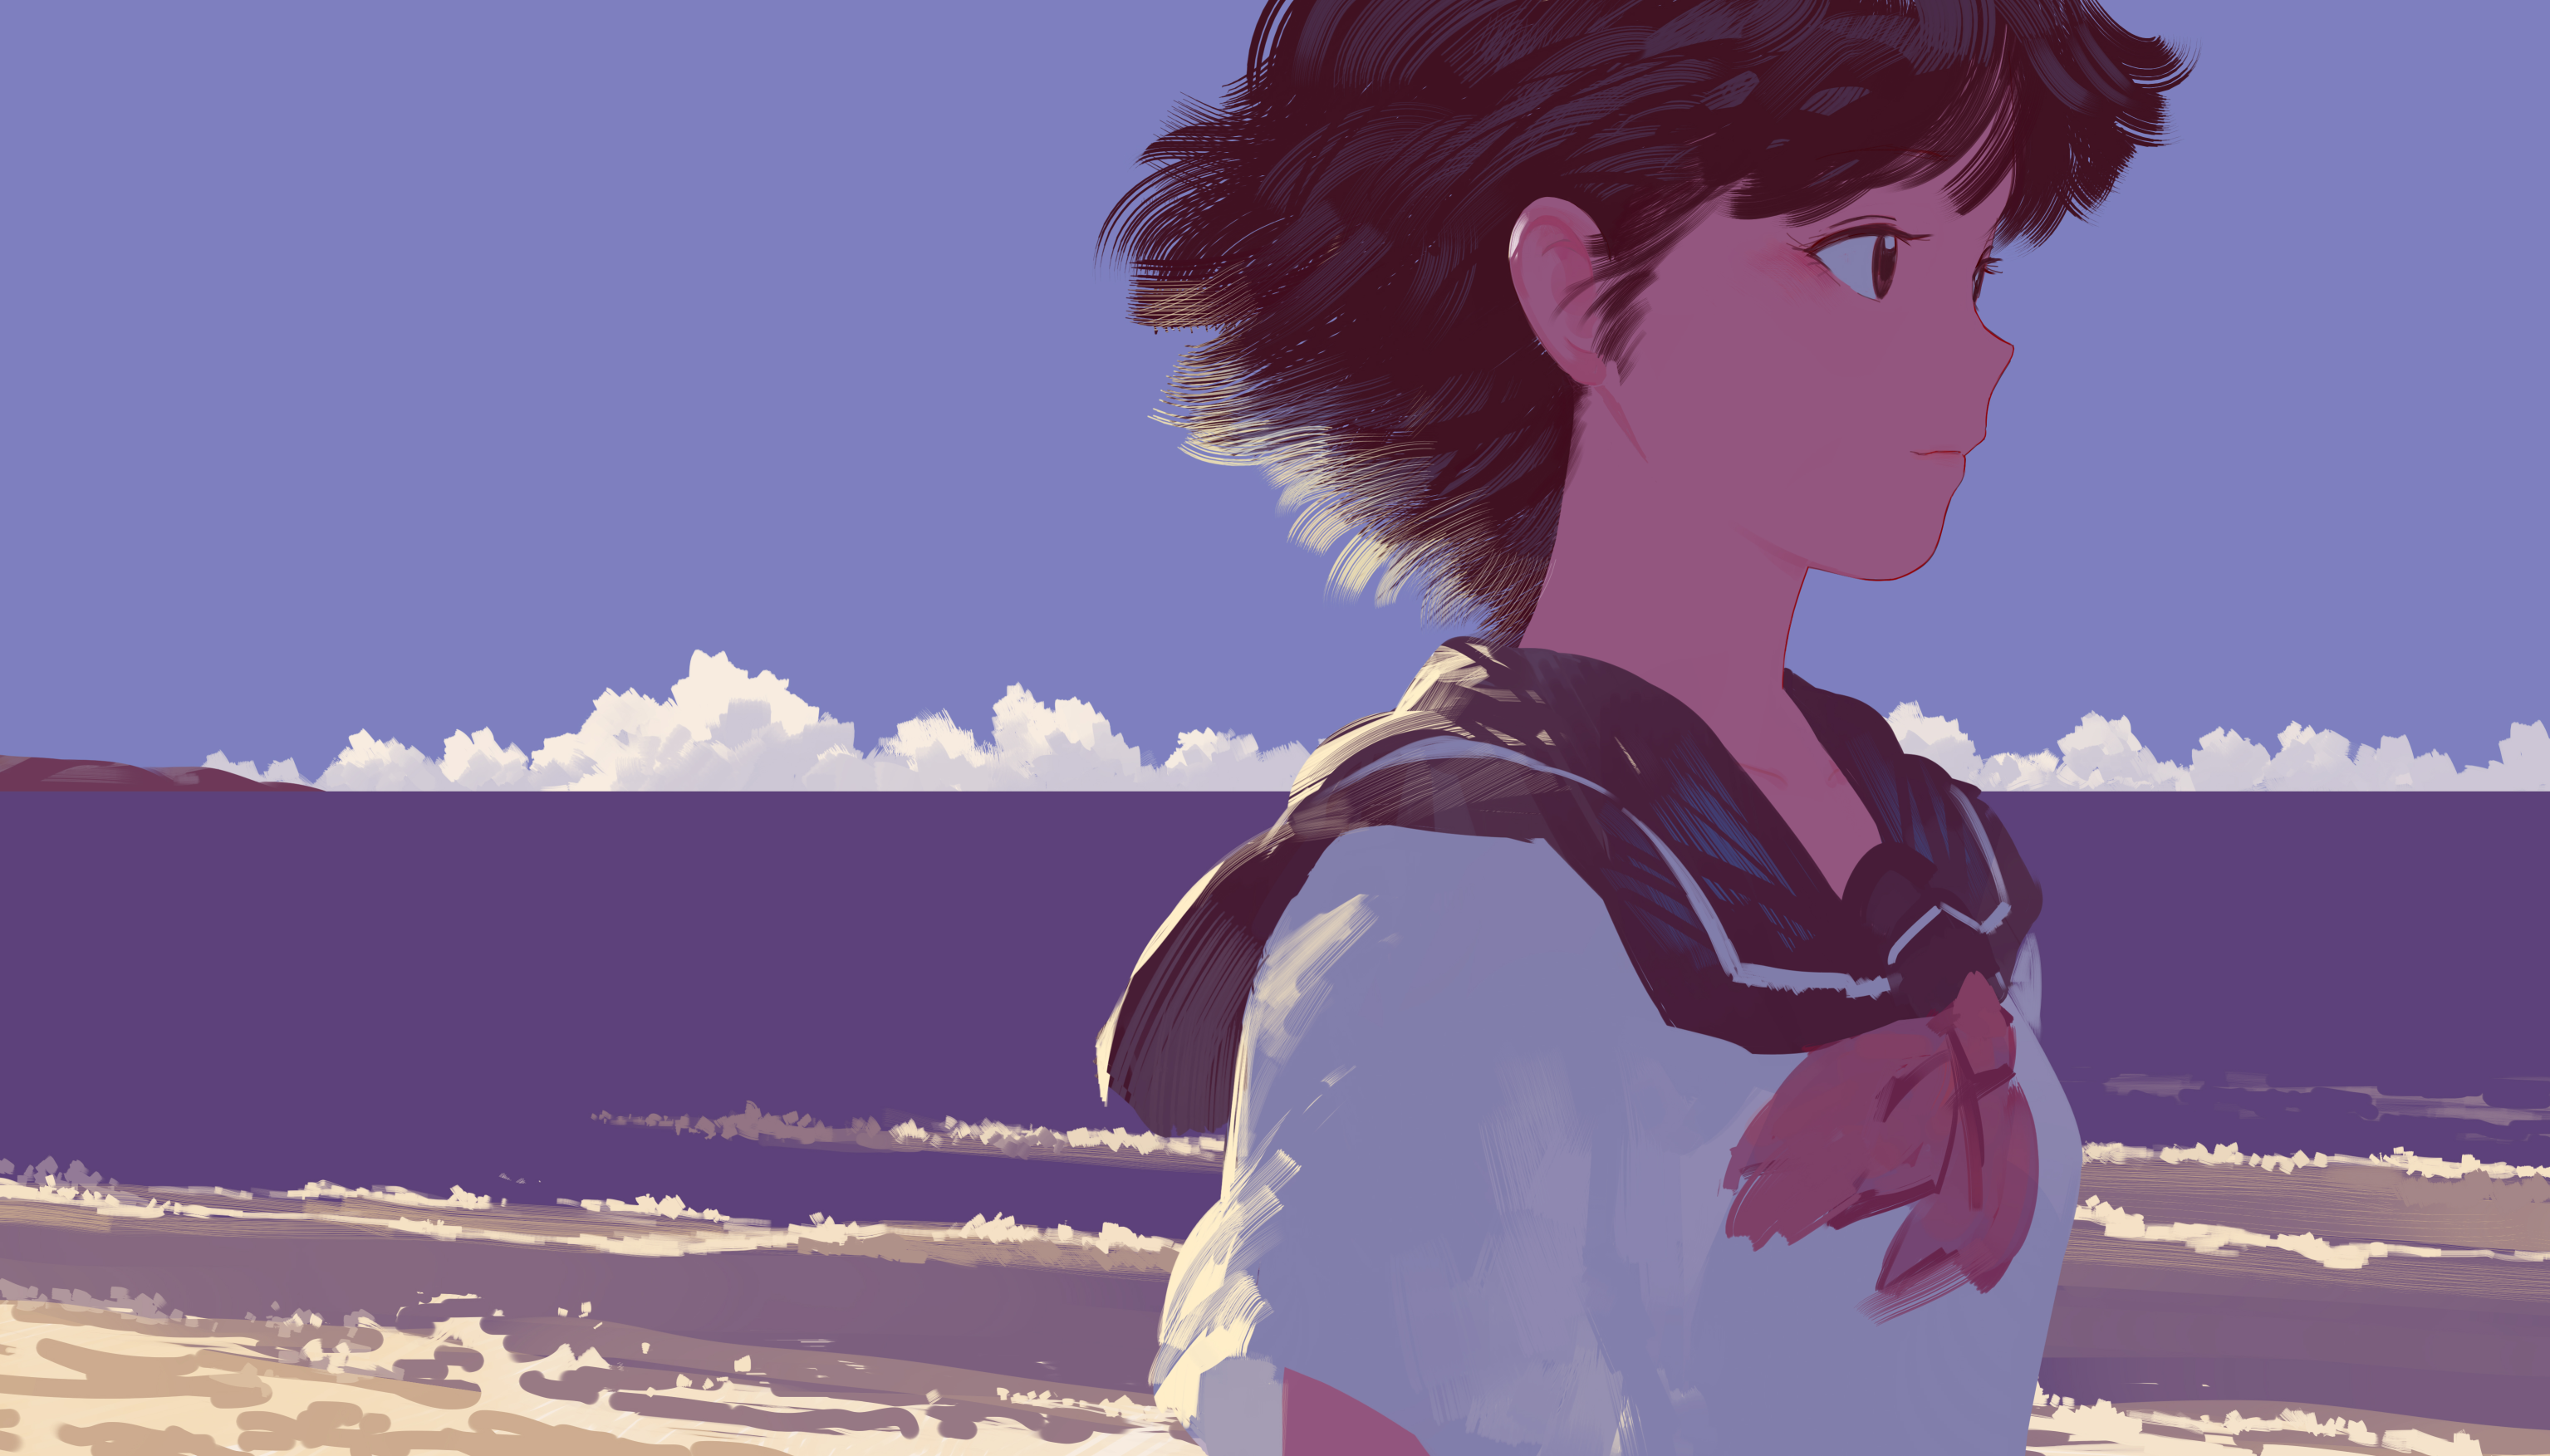 Anime 3070x1753 digital art artwork illustration anime anime girls women short hair dark hair school uniform landscape beach sea clouds minimalism looking away water schoolgirl